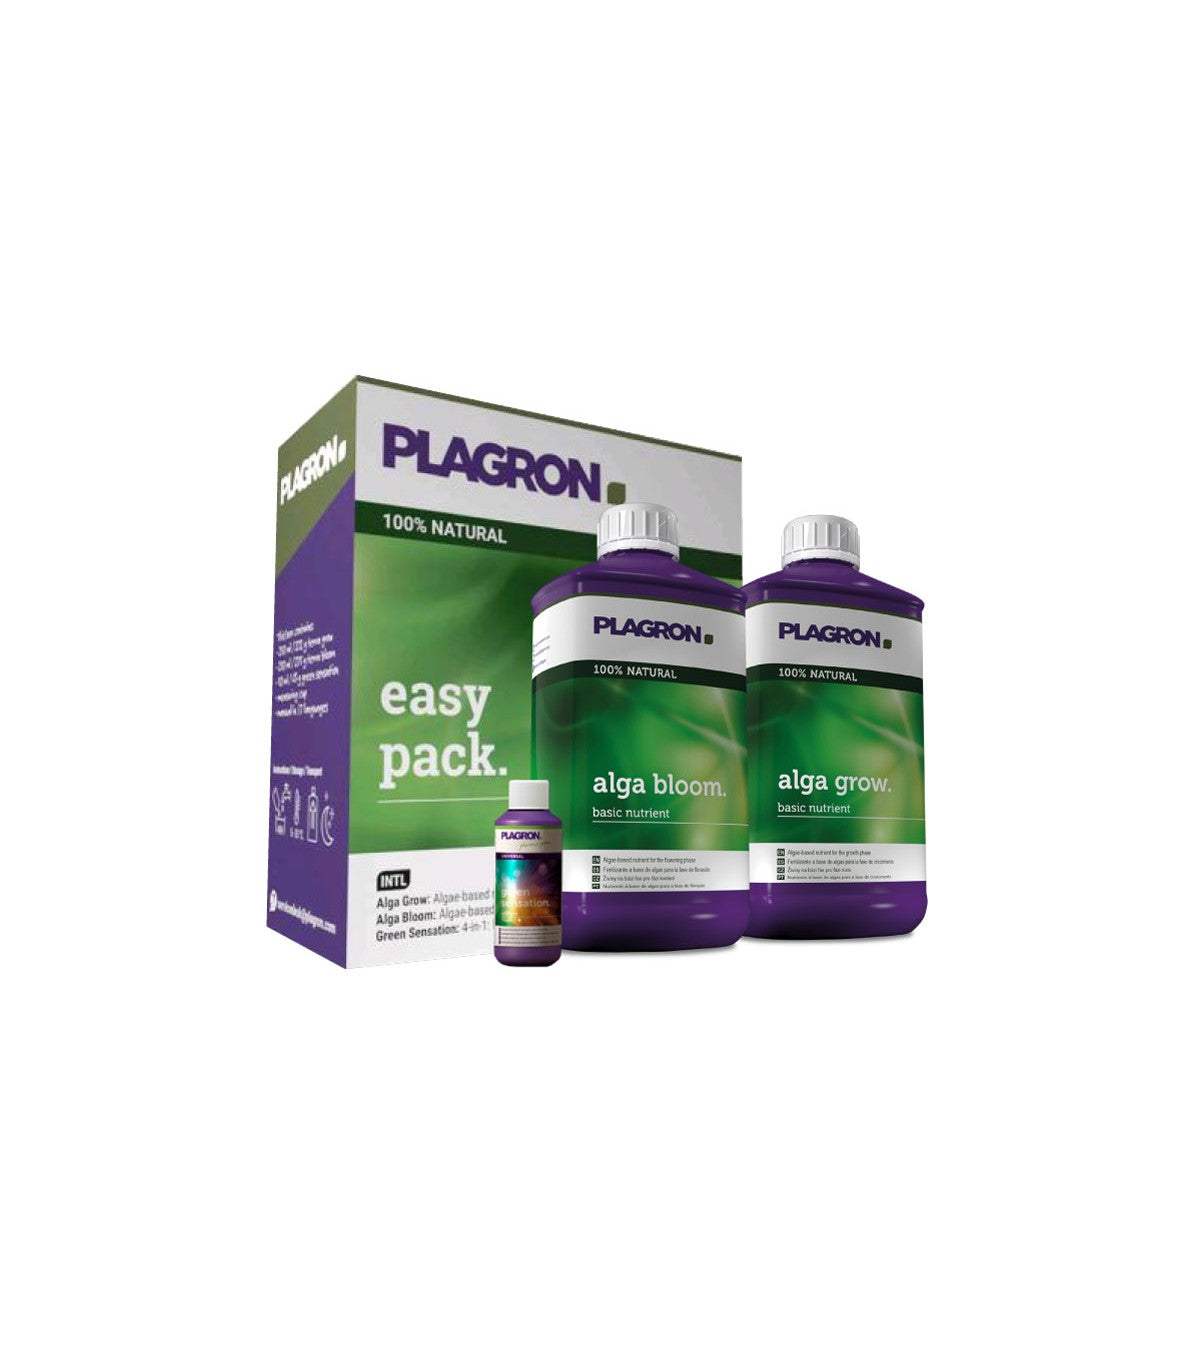 Plagron Easy pack natural